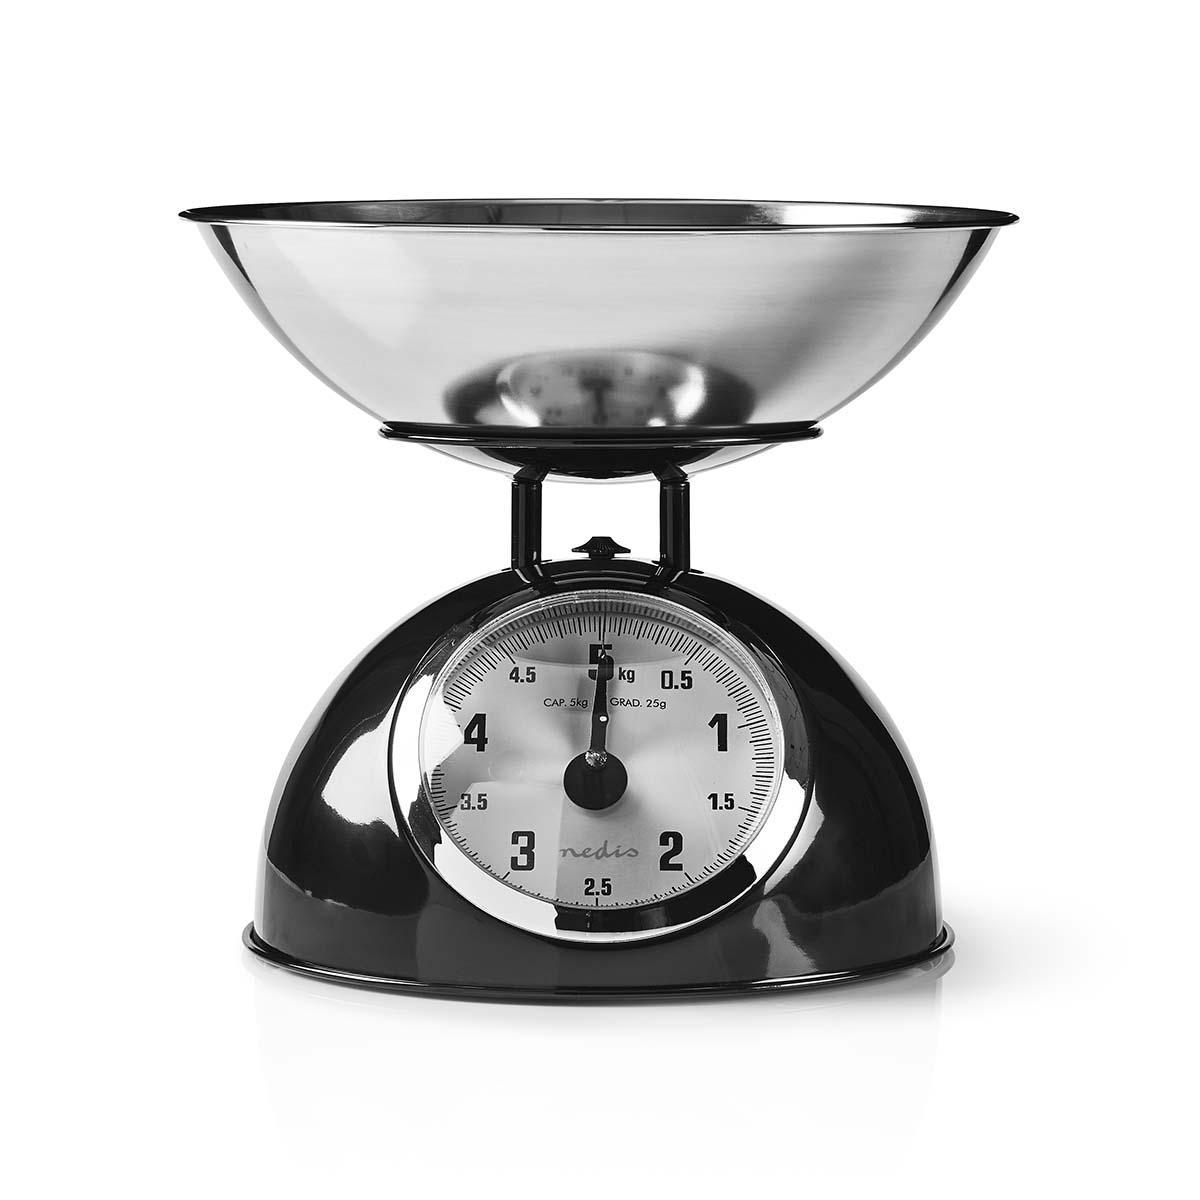 Bilancia da cucina digitale in acciaio inox da 5 kg Aigostar nero